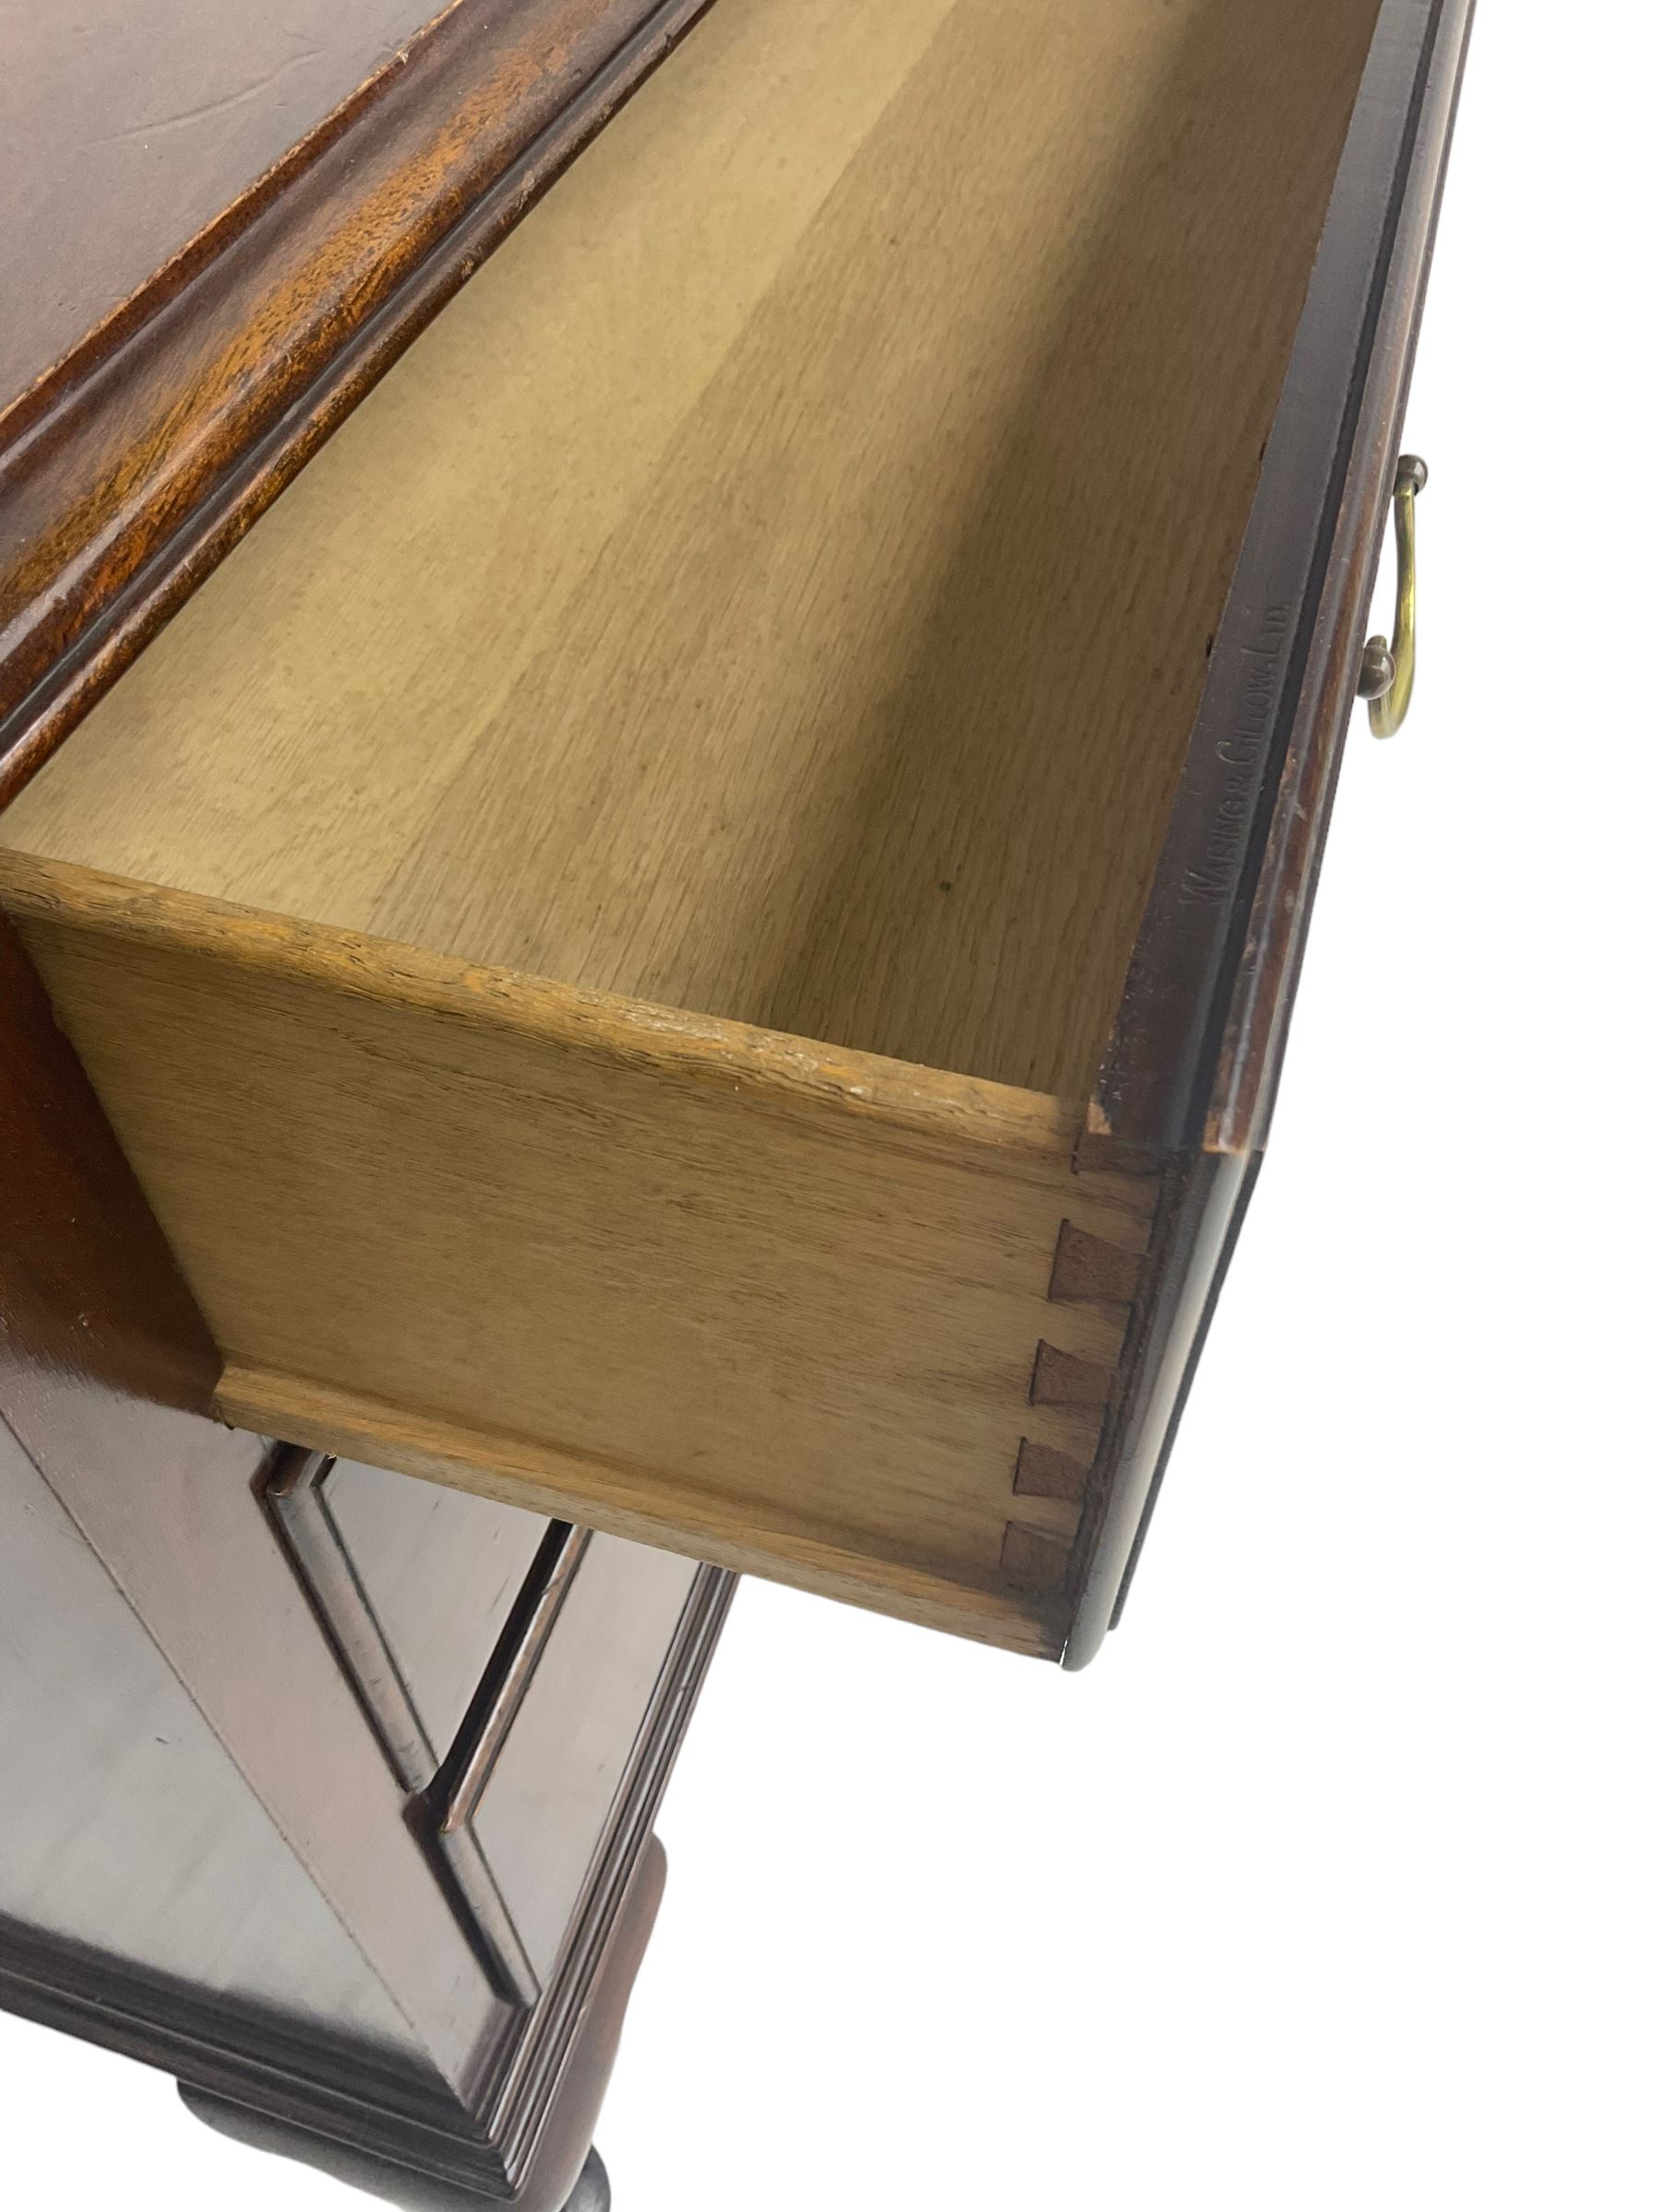 Waring & Gillow - Georgian design mahogany chest - Image 4 of 8